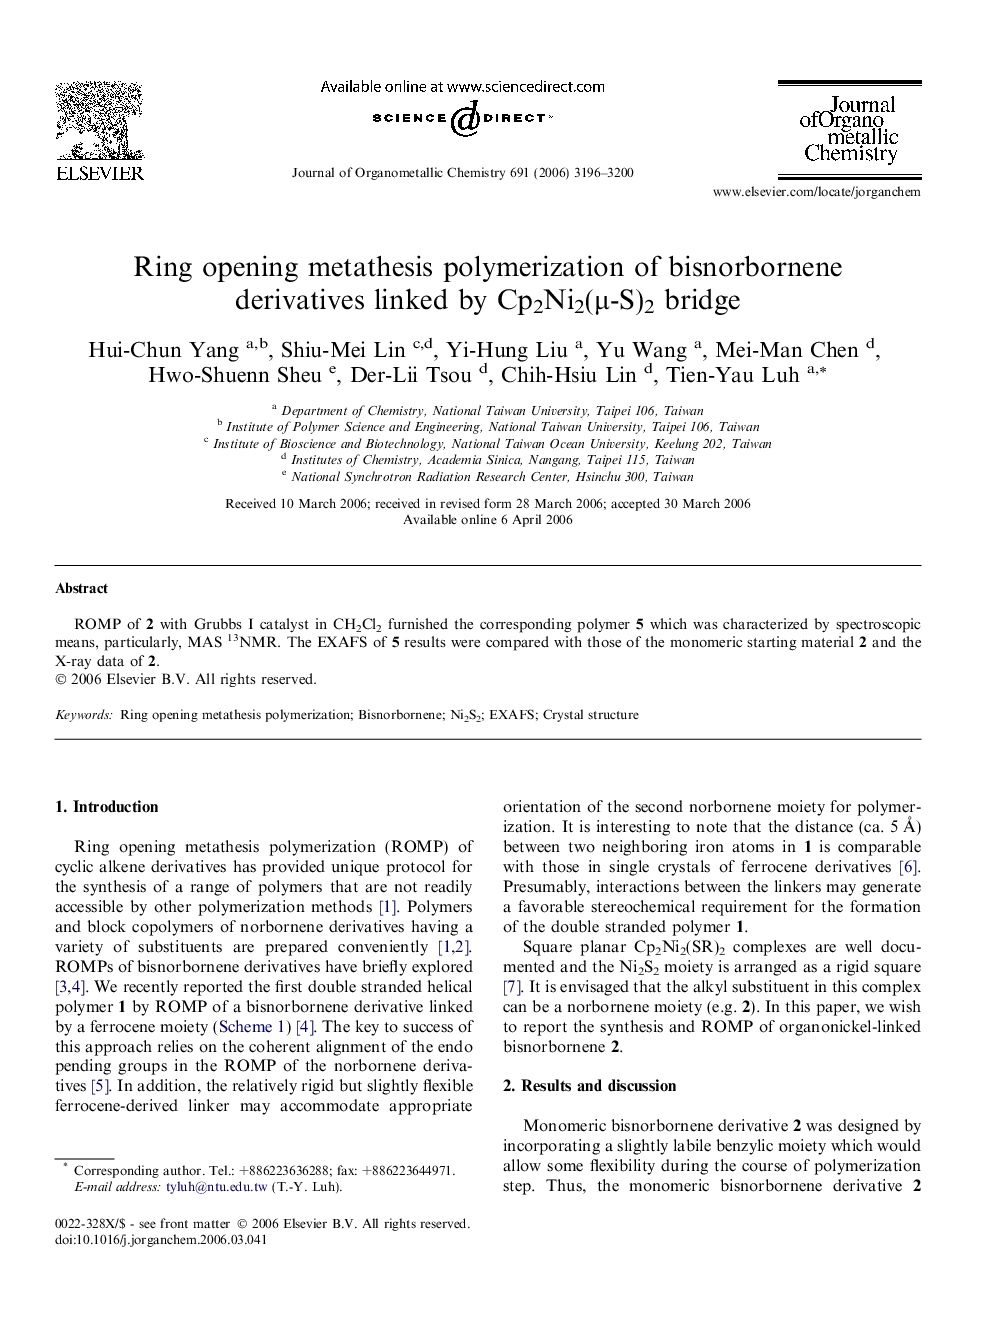 Ring opening metathesis polymerization of bisnorbornene derivatives linked by Cp2Ni2(μ-S)2 bridge